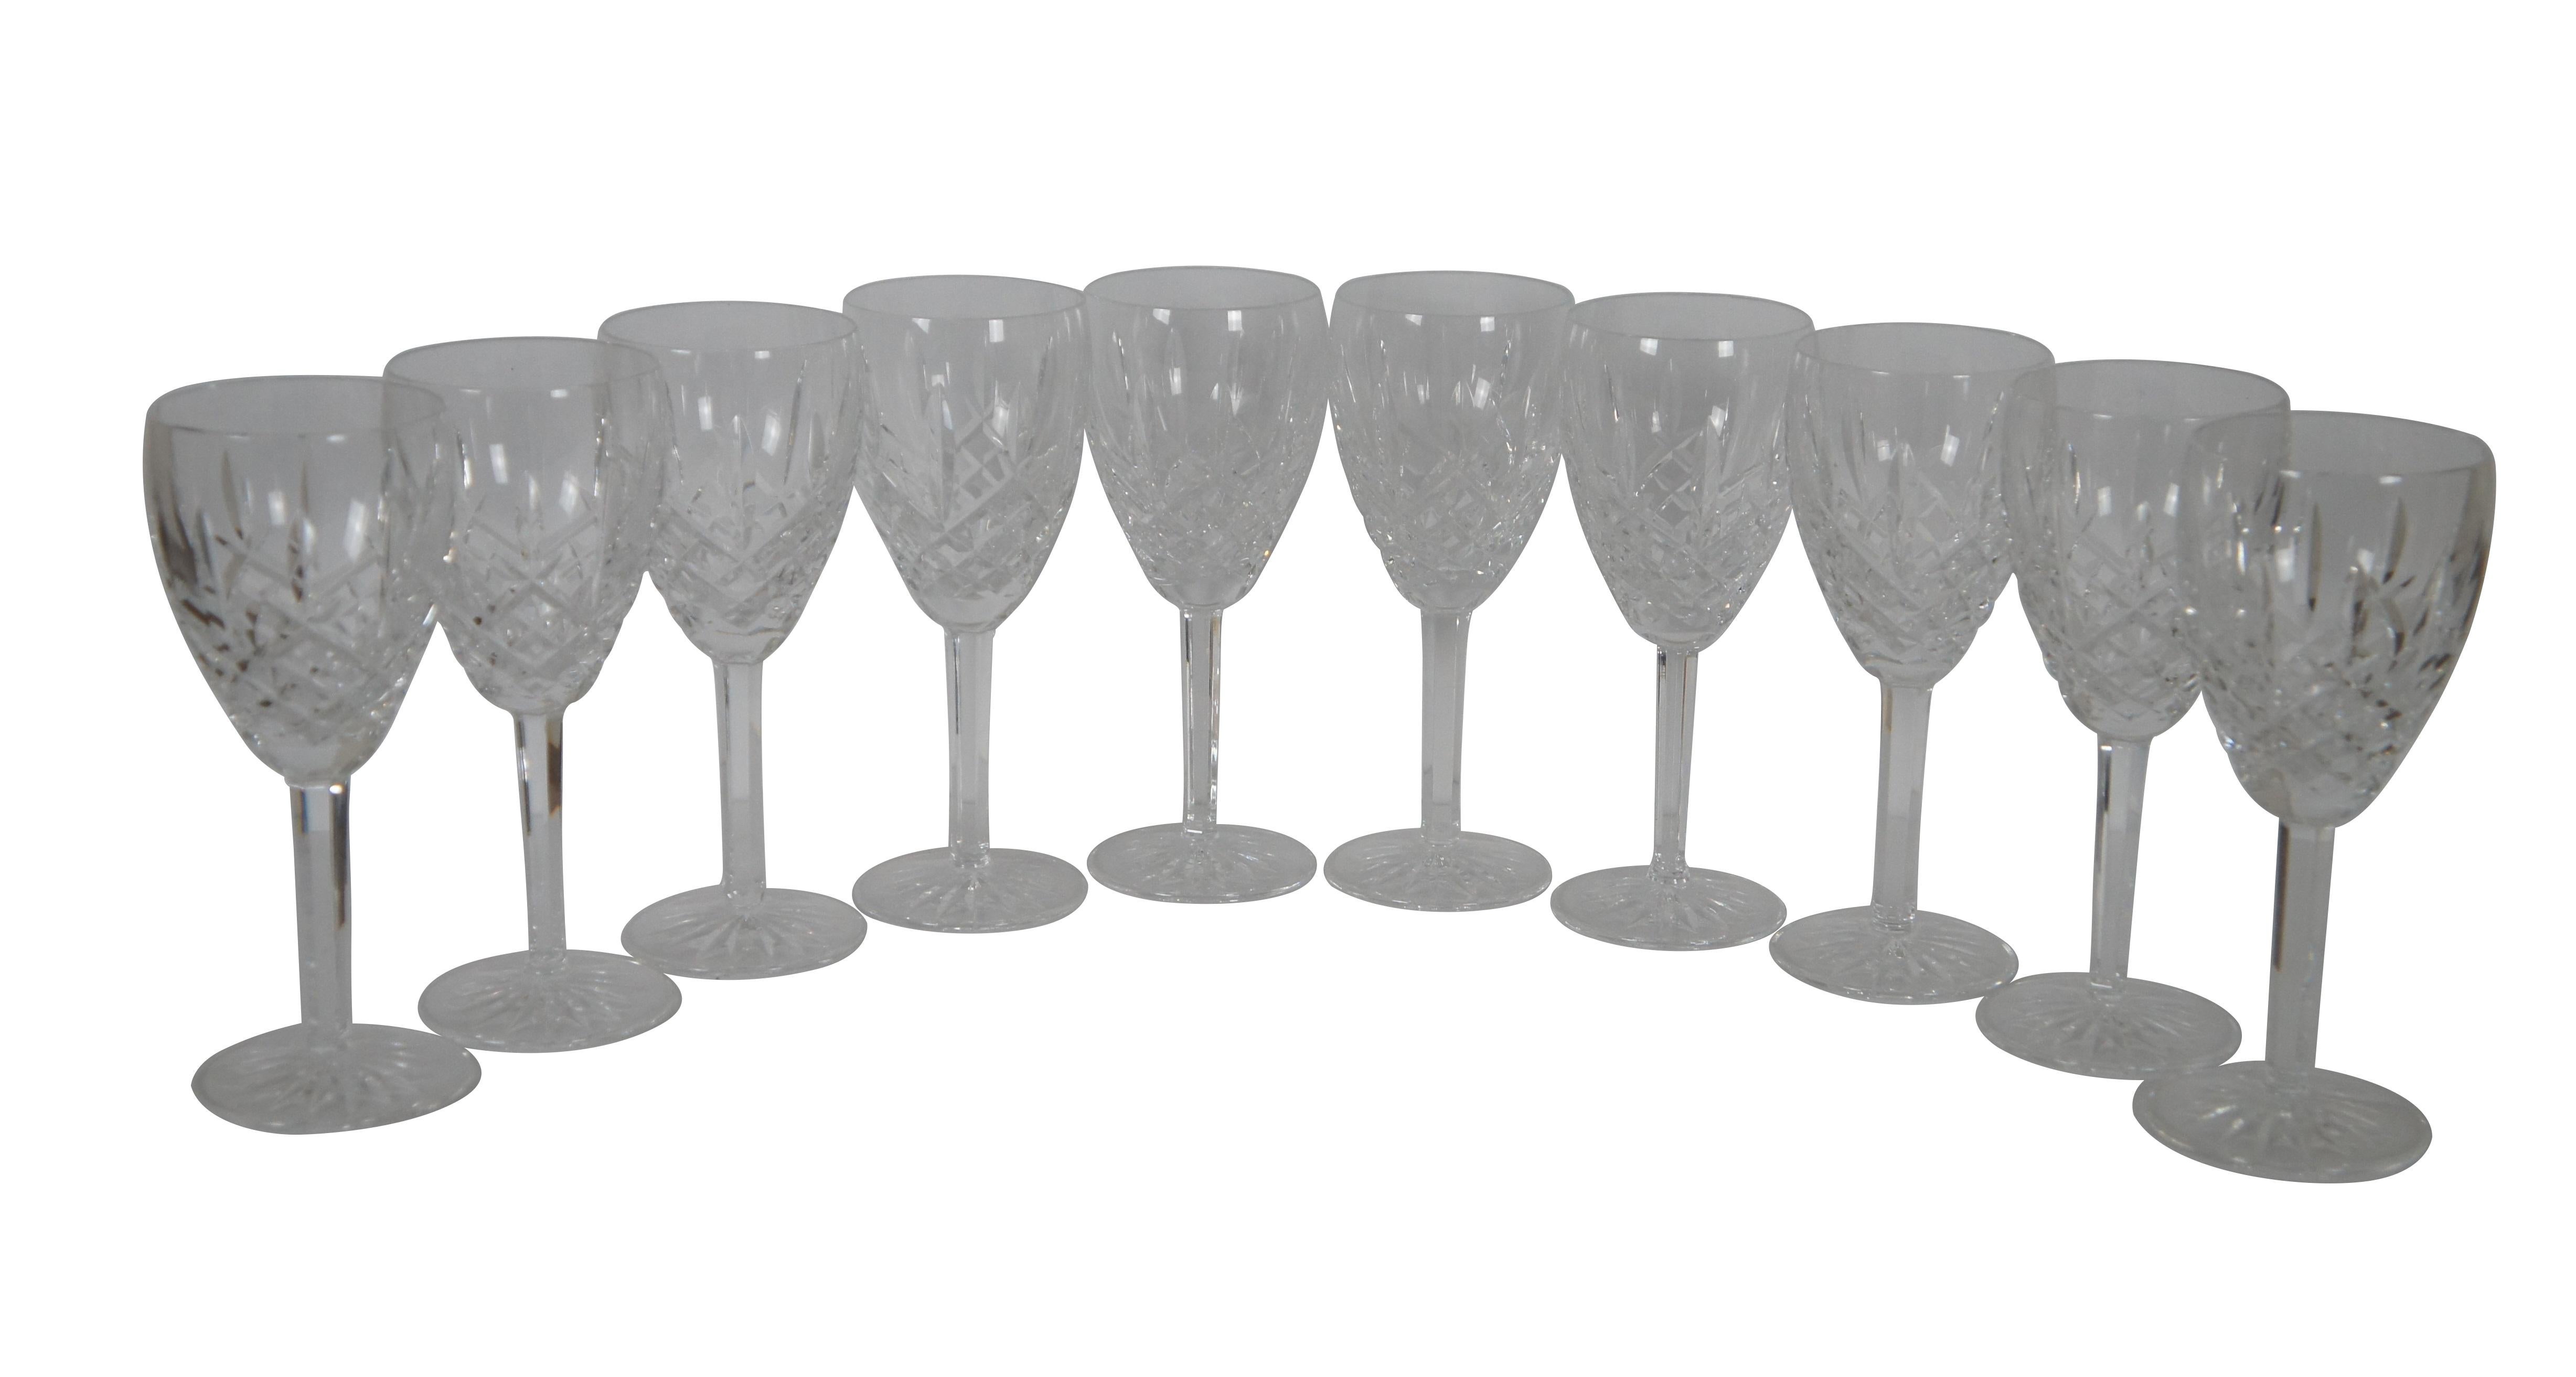 Set of ten vintage Waterford Crystal wine or water glasses in the Araglin pattern.

Dimensions:
2.75” x 7” (Diameter x Height)